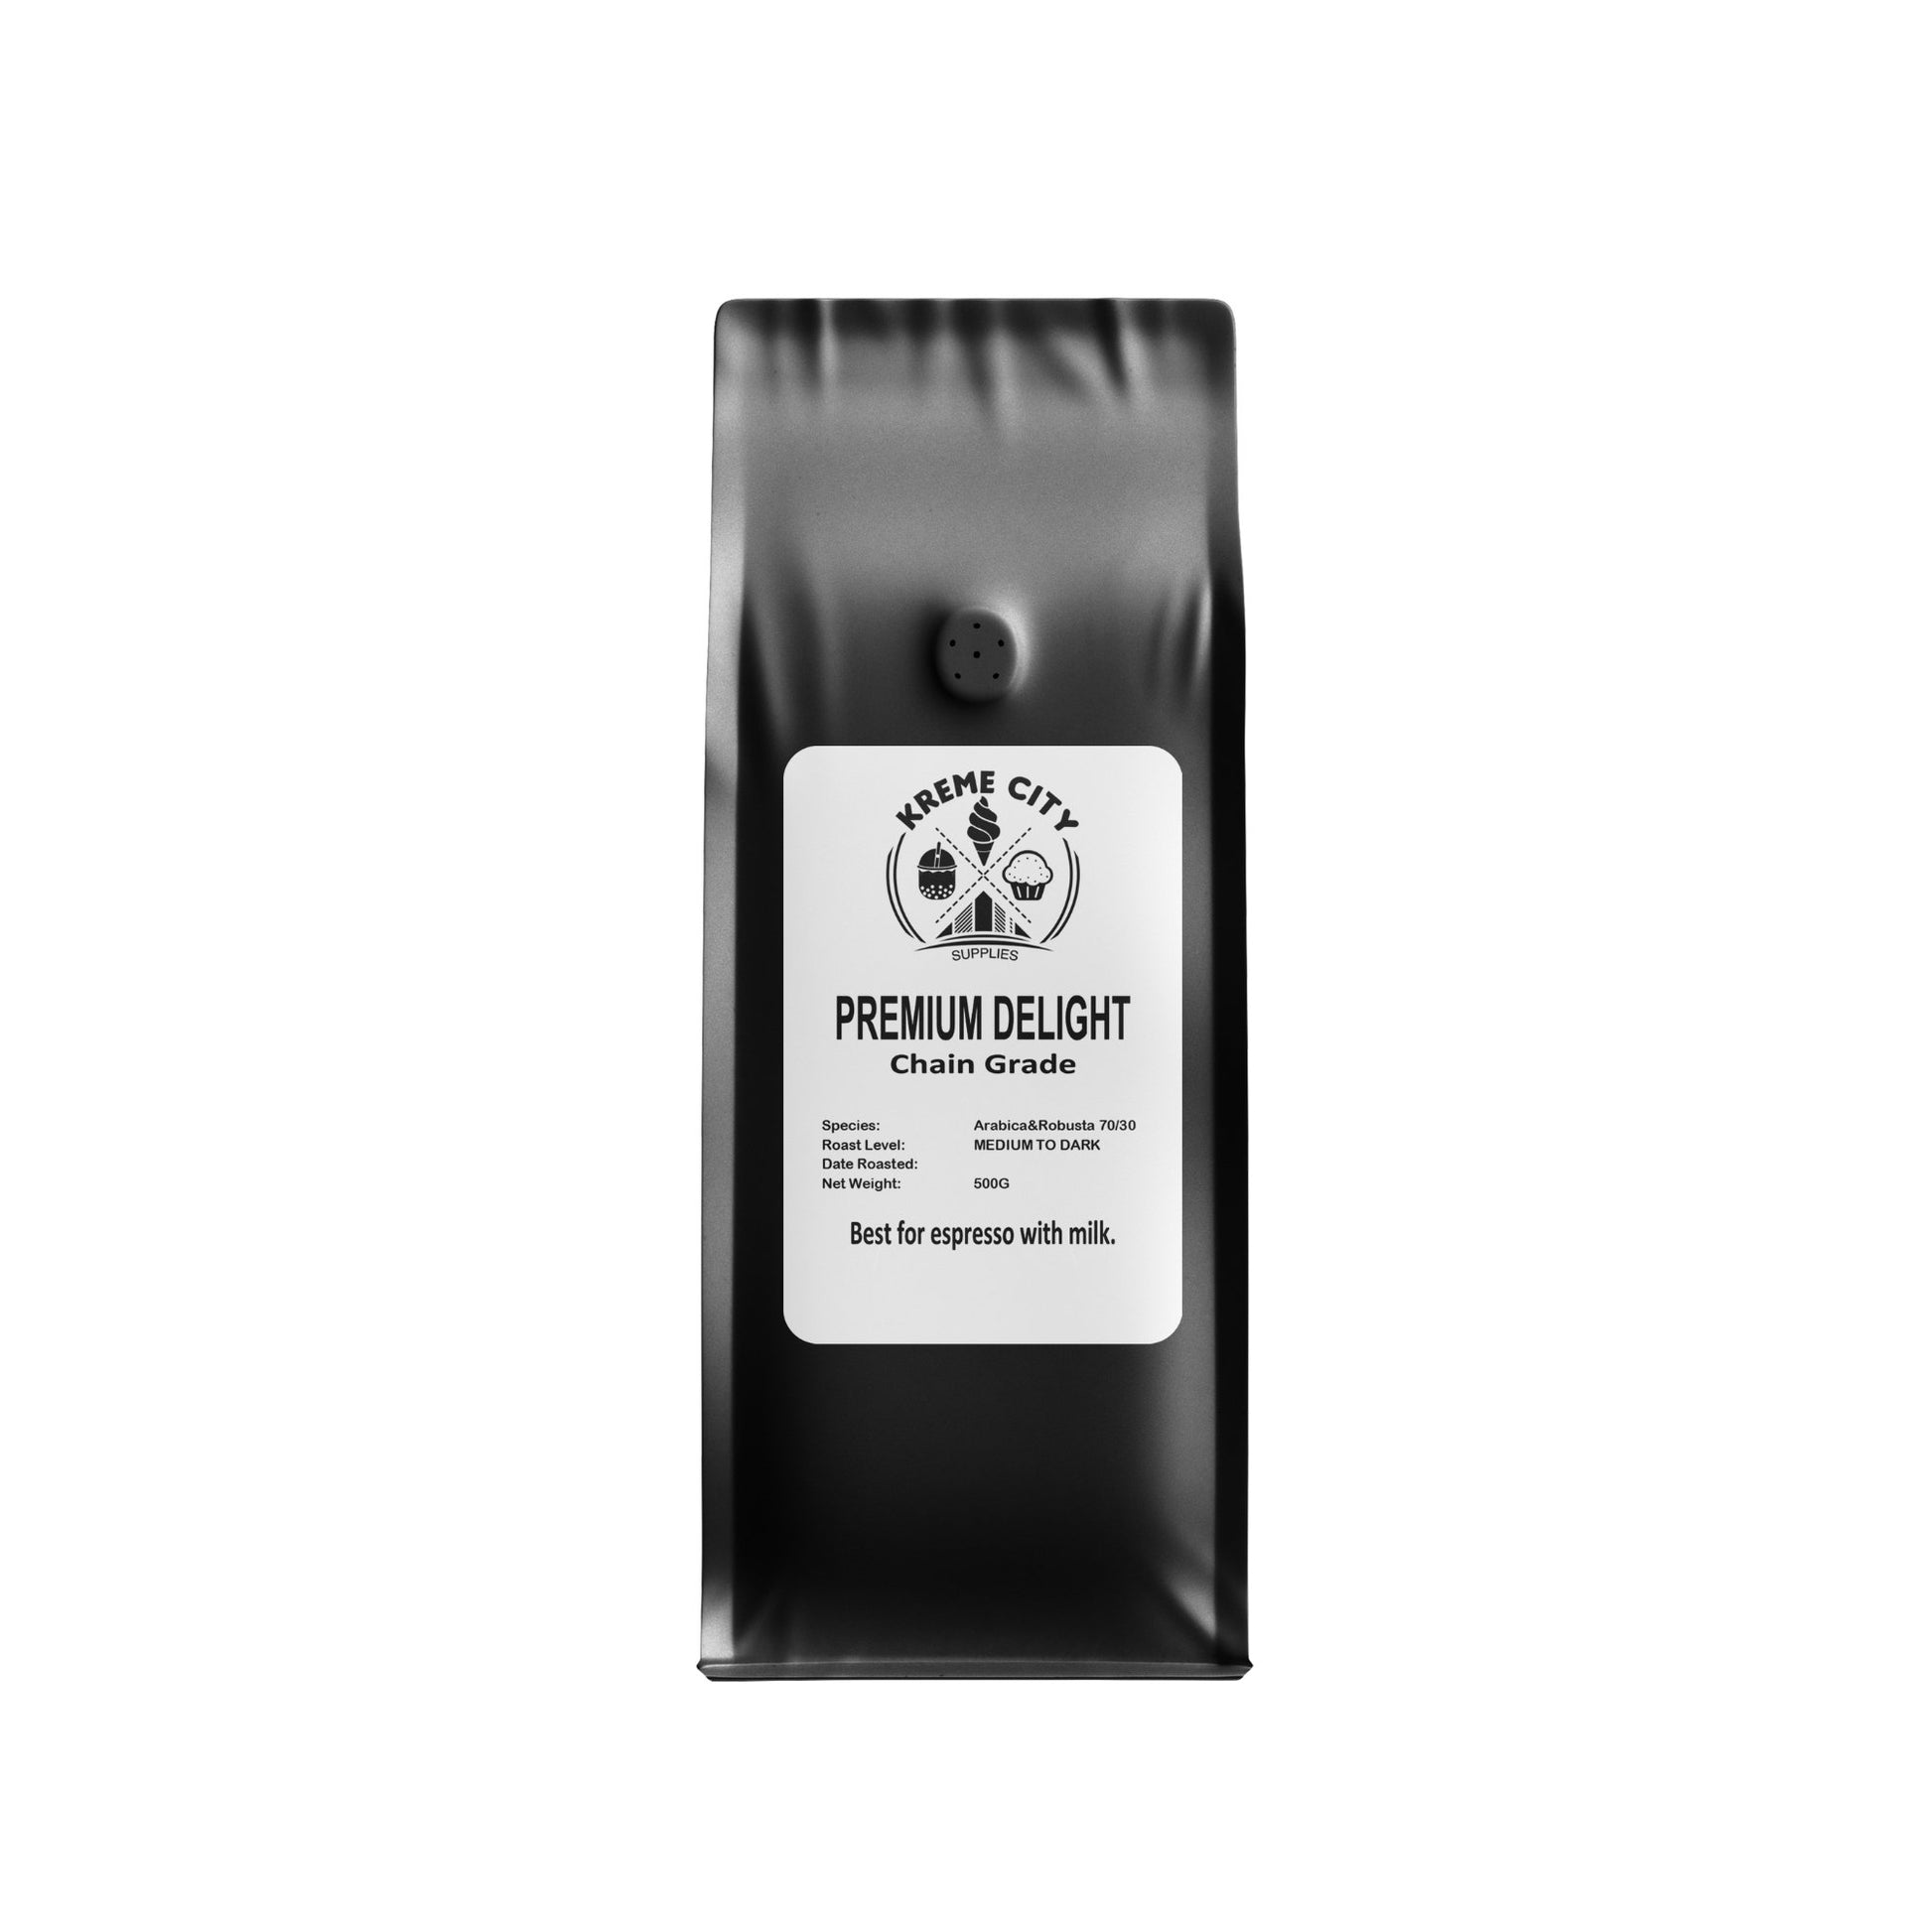 Kreme City Premium Delight Arabica-Robusta Blended Coffee Beans 500g - Kreme City Supplies